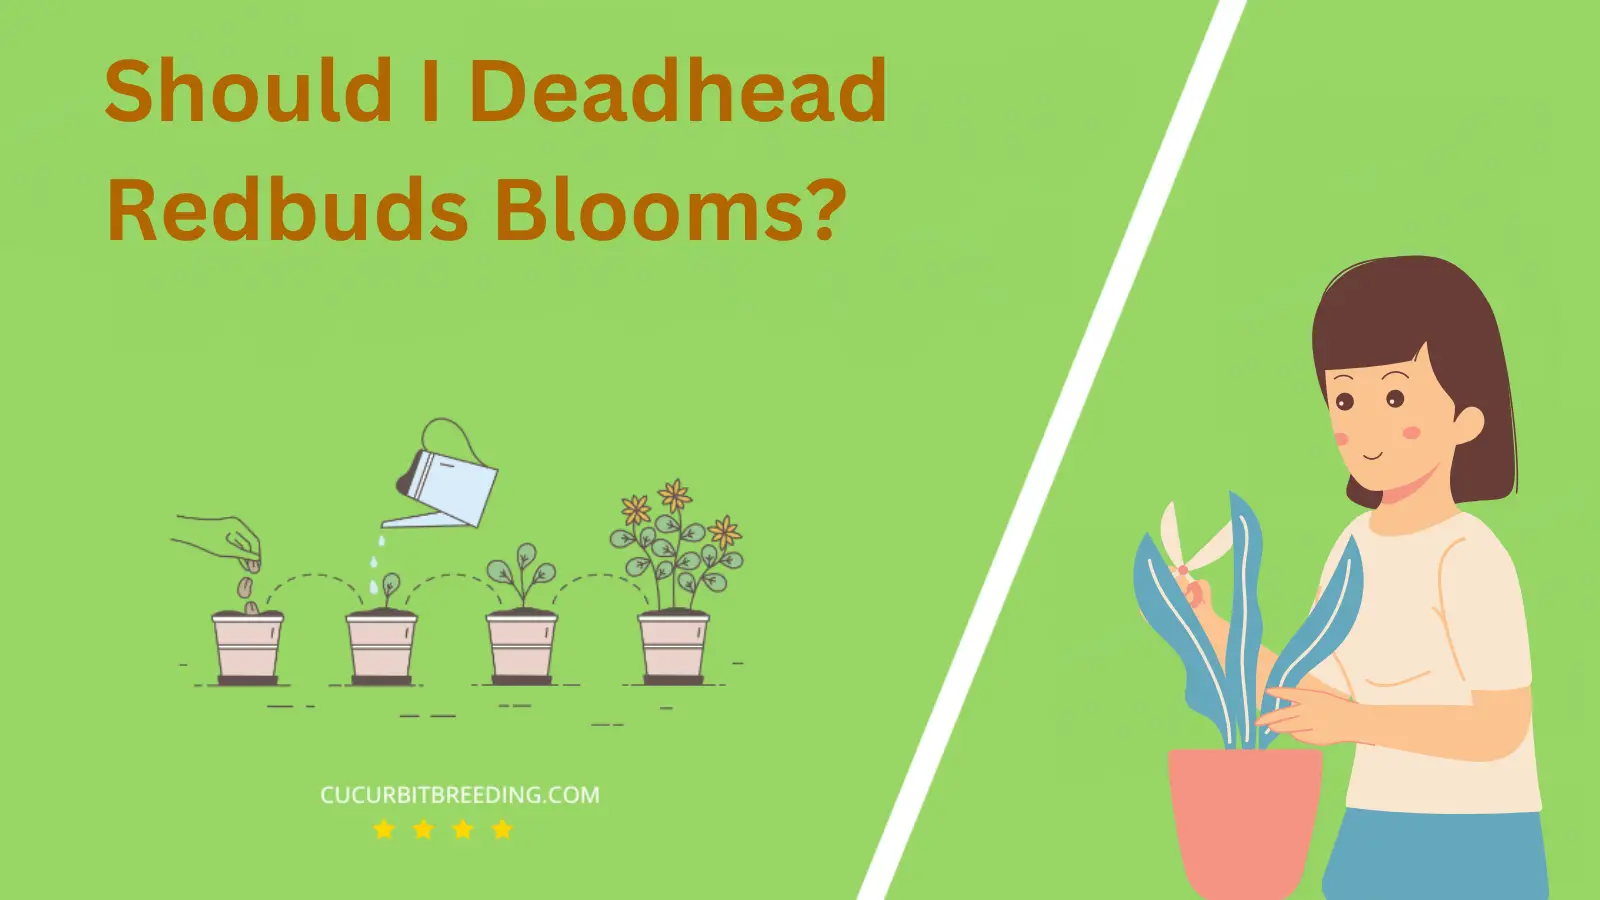 Should I Deadhead Redbuds Blooms?